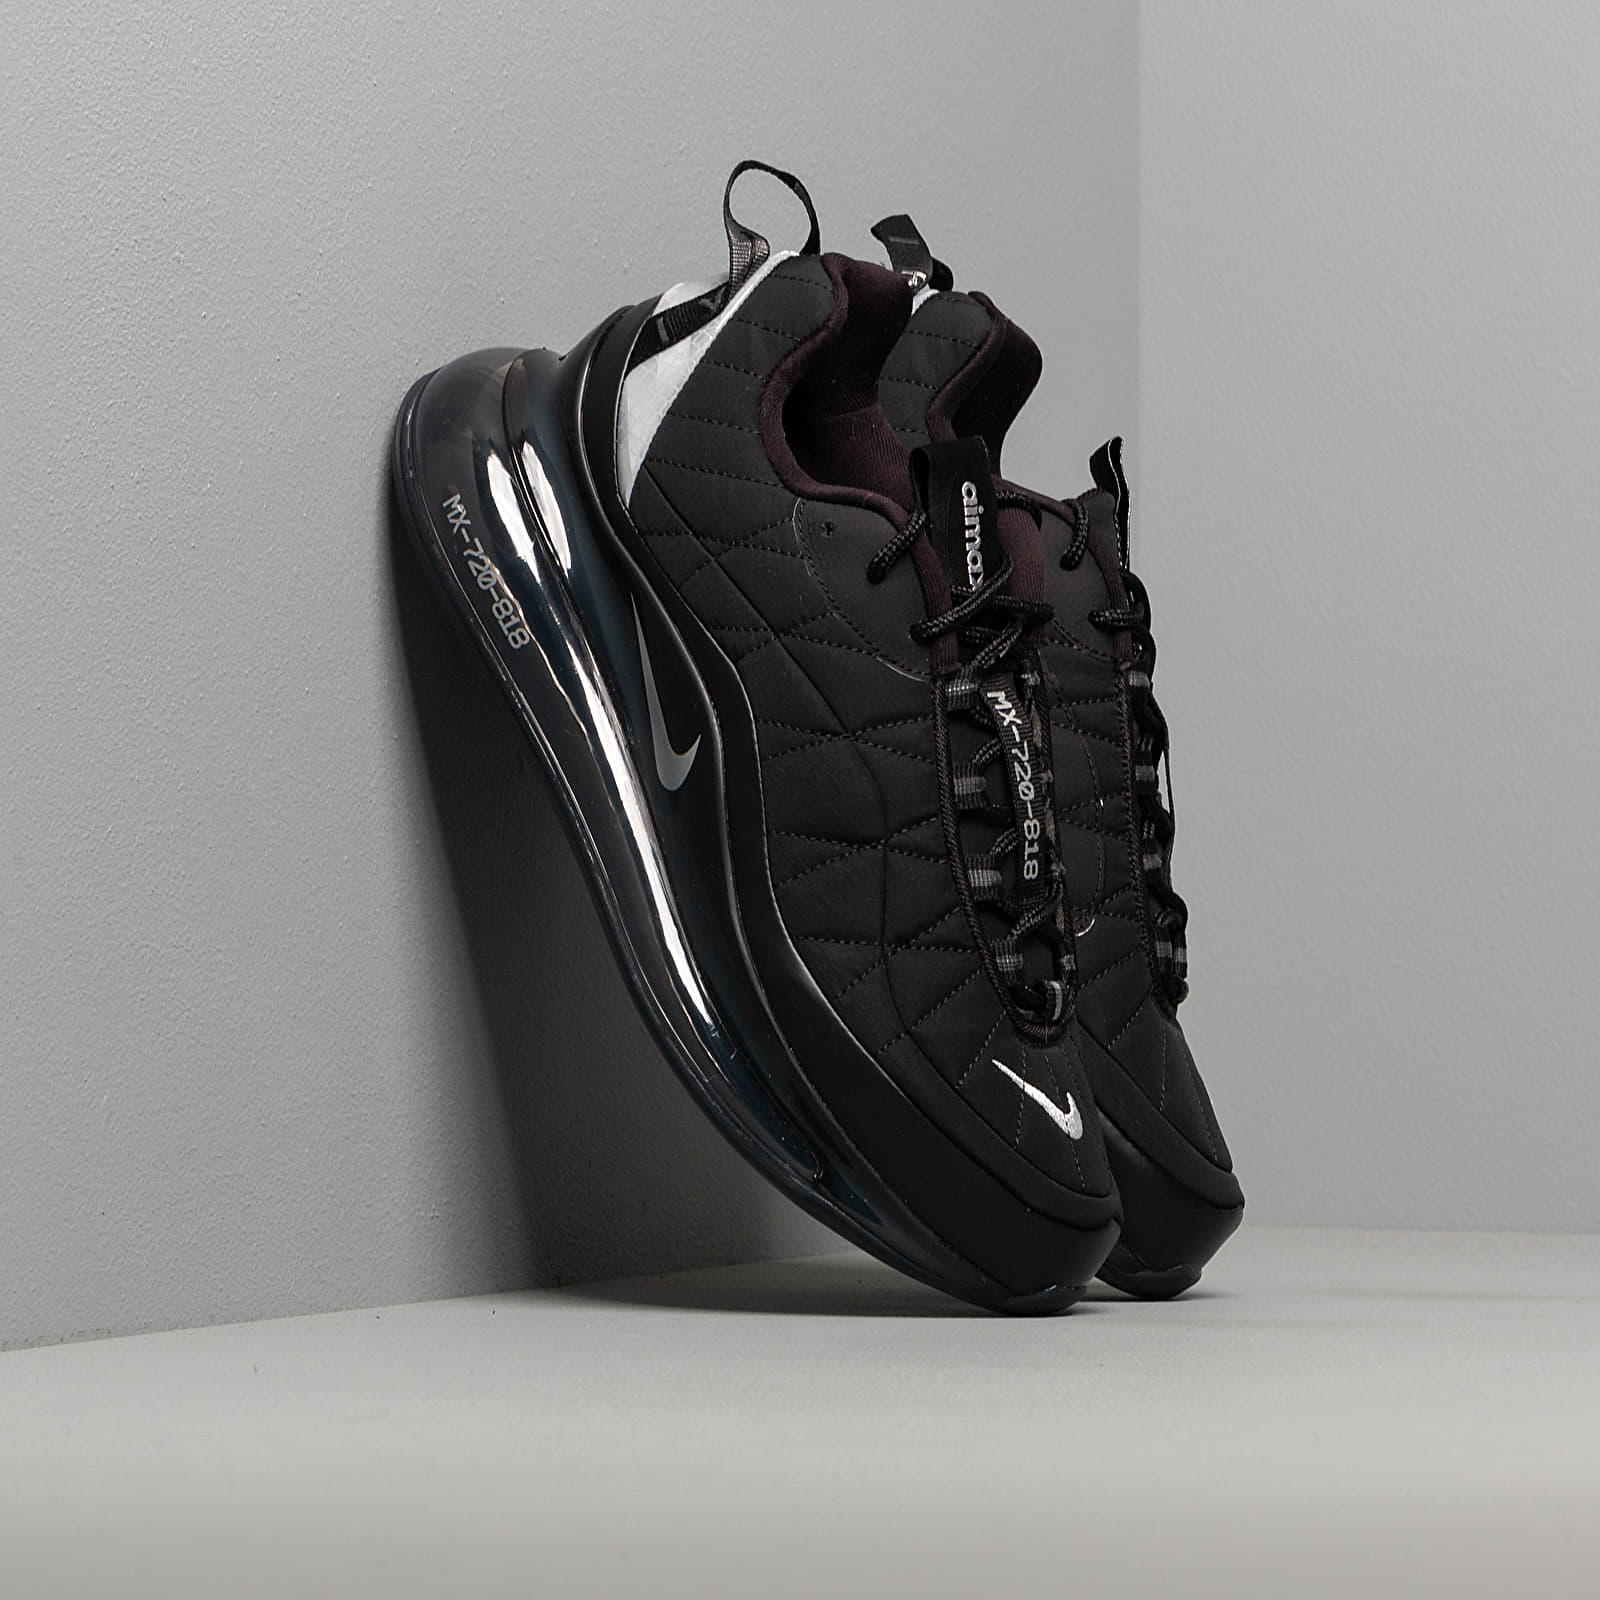 Chaussures et baskets femme Nike W Mx-720-818 Black/ Metallic  Silver-Black-Anthracite | Footshop